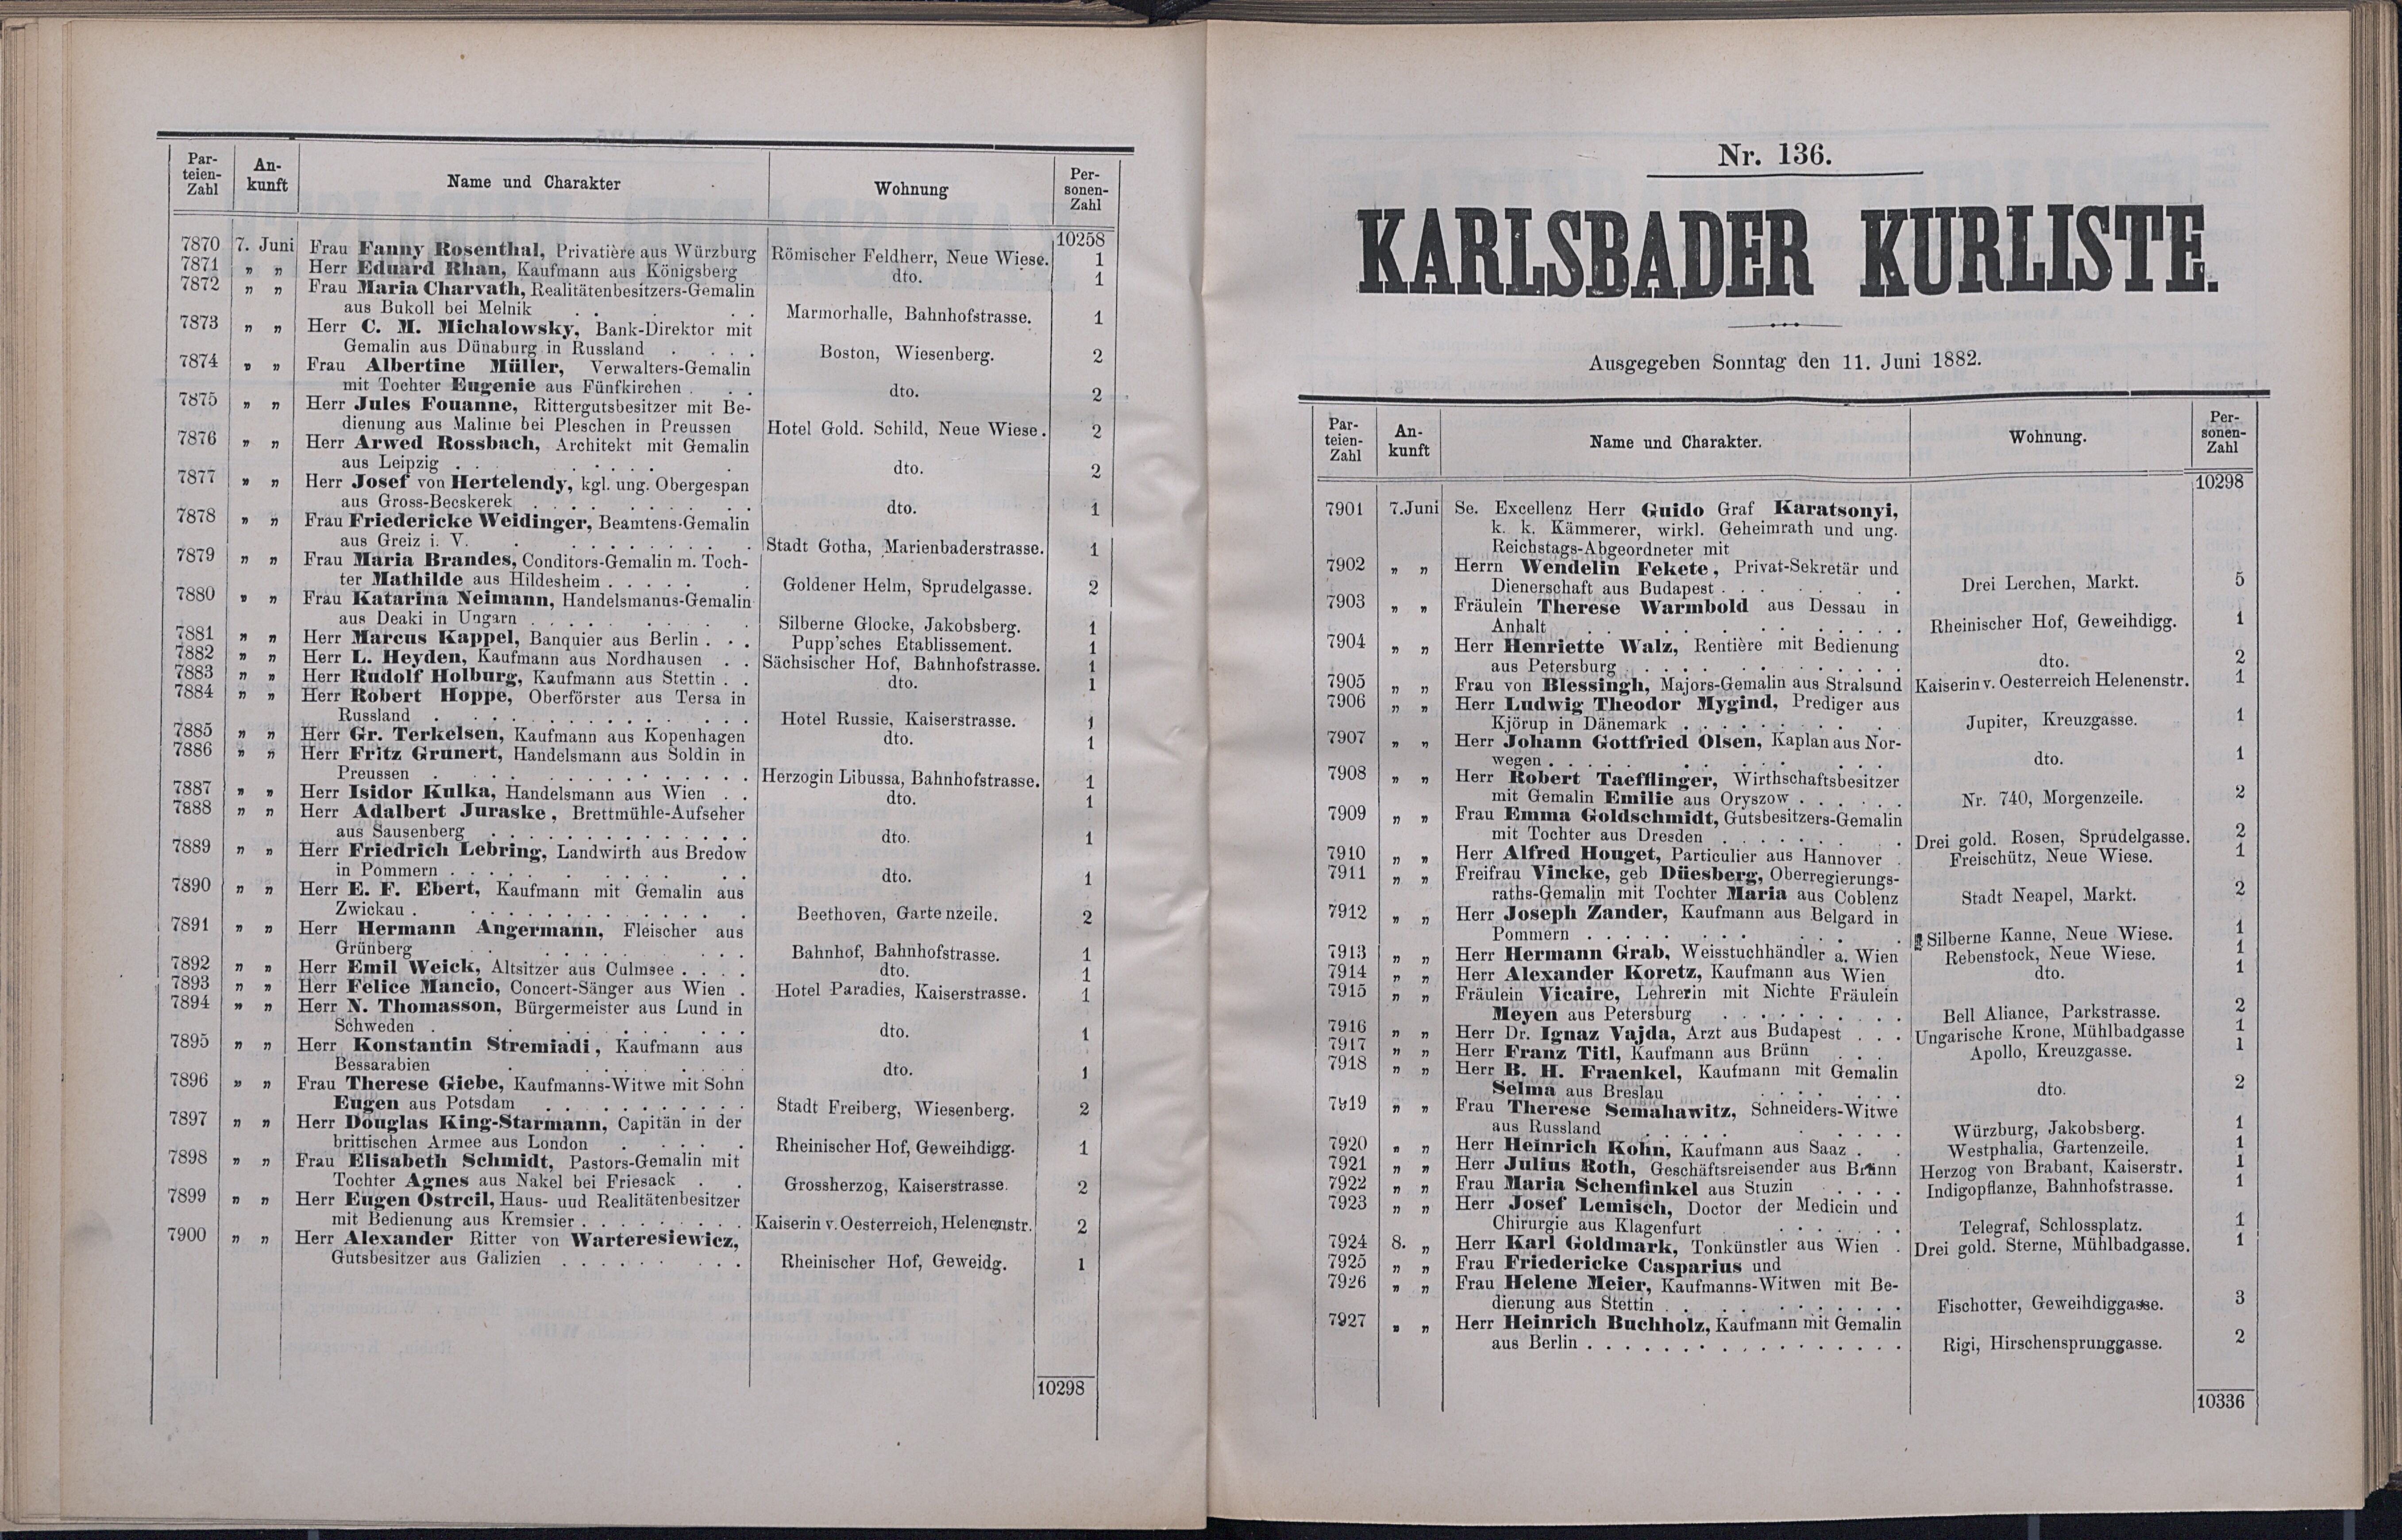 183. soap-kv_knihovna_karlsbader-kurliste-1882_1840